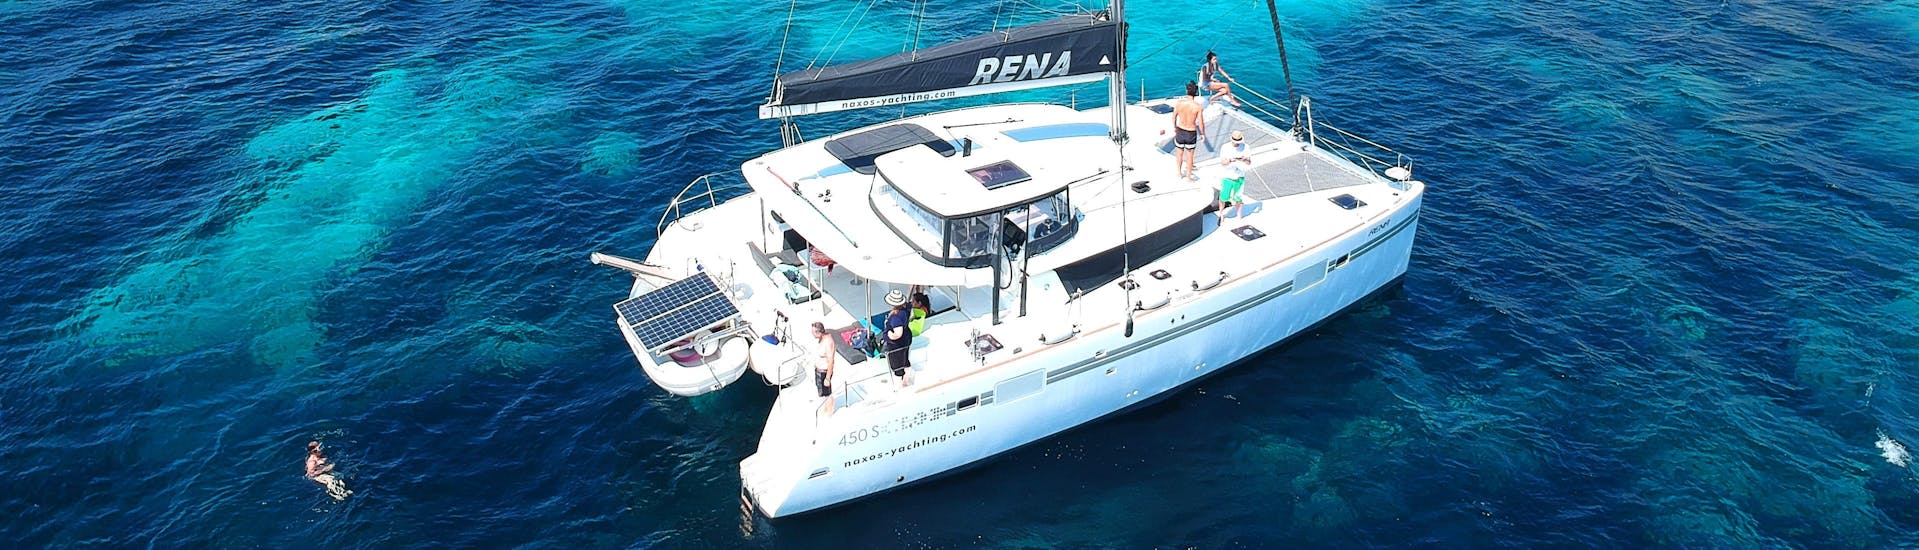 luxury-catamaran-cruise-from-naxos-with-snorkeling-breaks-naxos-yatching-hero